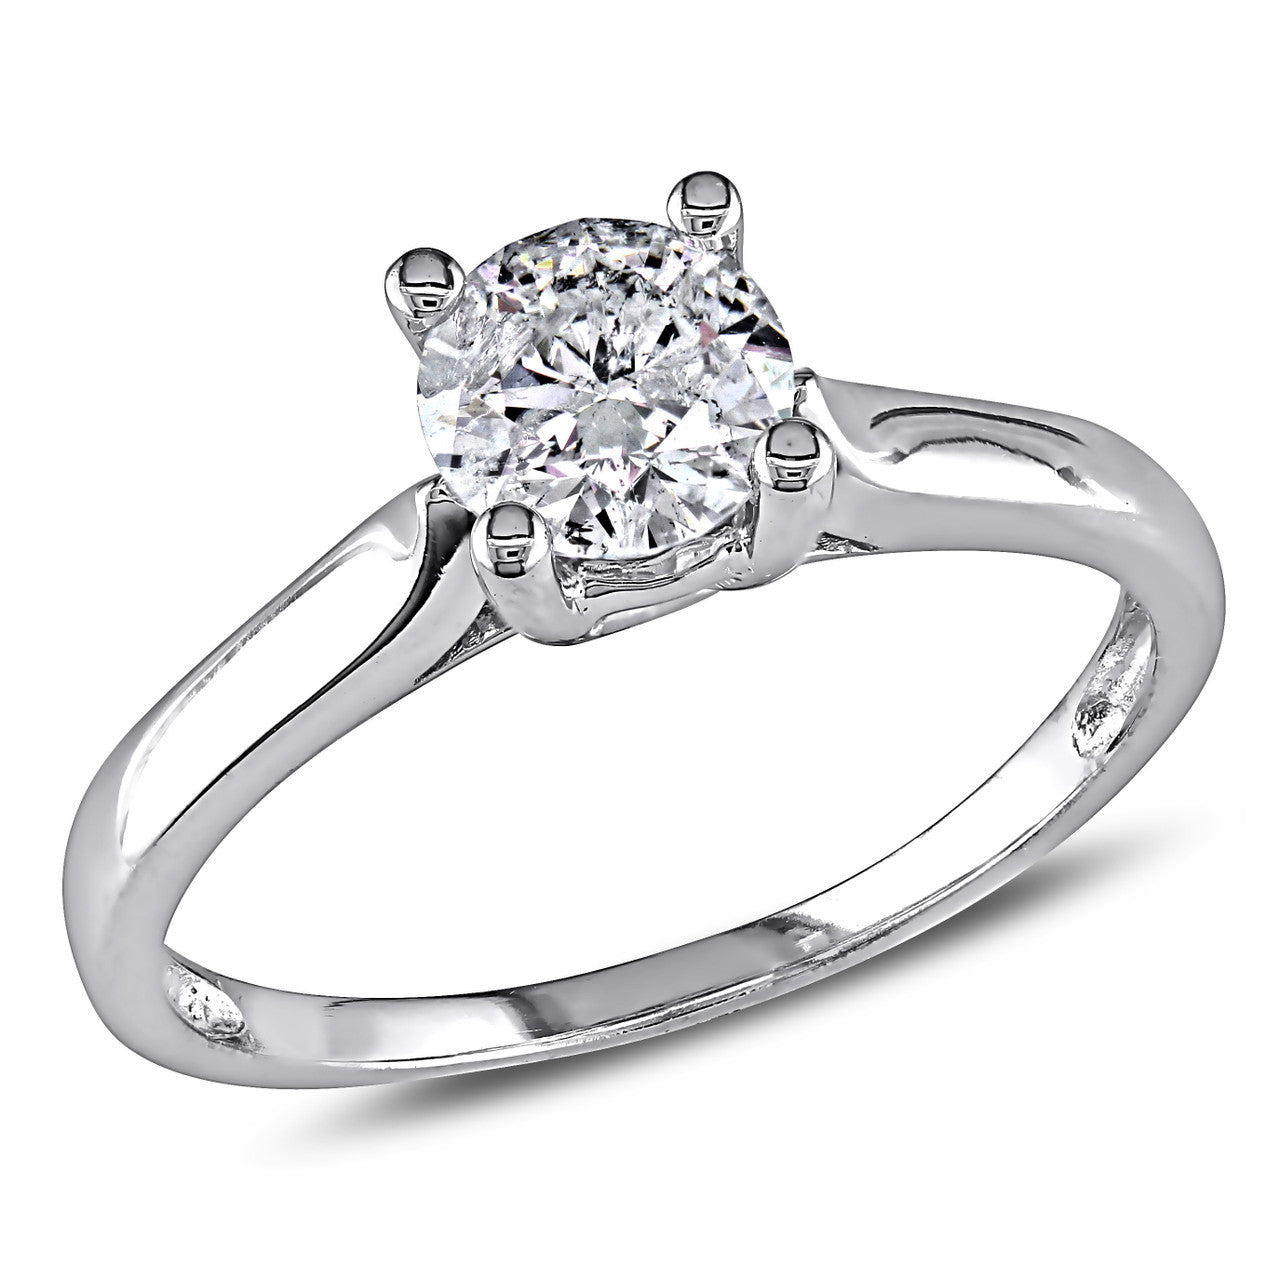 Ice Jewellery 3/4 CT Diamond TW Solitaire Ring 14k White Gold GH I2;I3 - 75000004576 | Ice Jewellery Australia